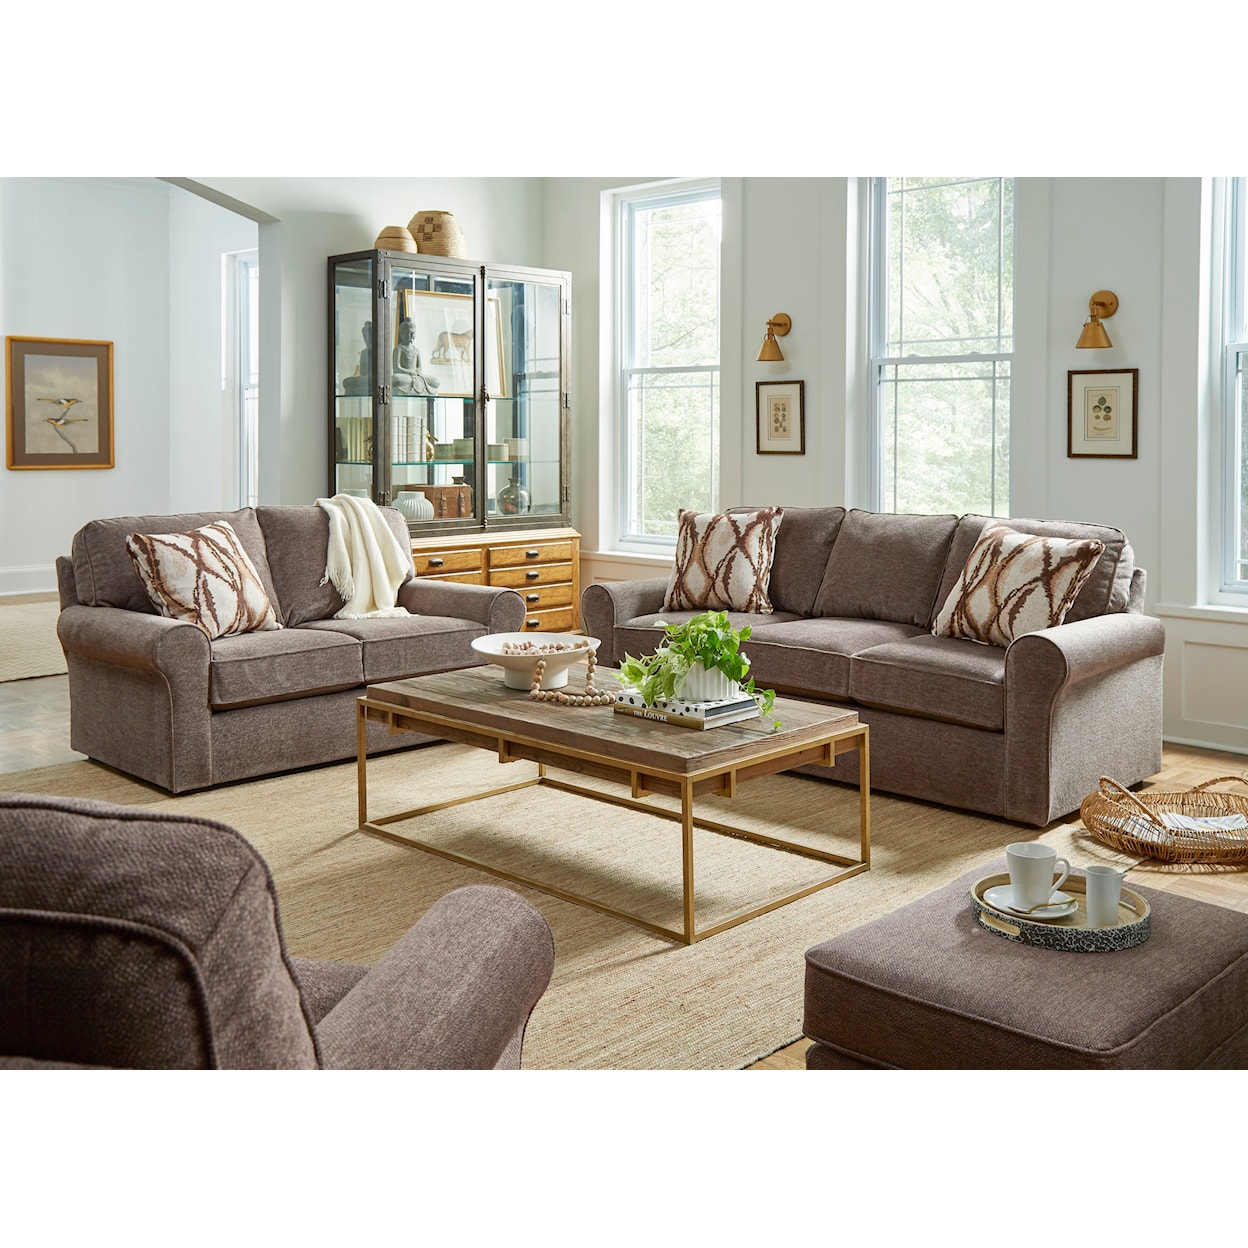 Bravo Furniture Hanway Queen Sleeper Sofa w/ Memory Foam Mattress